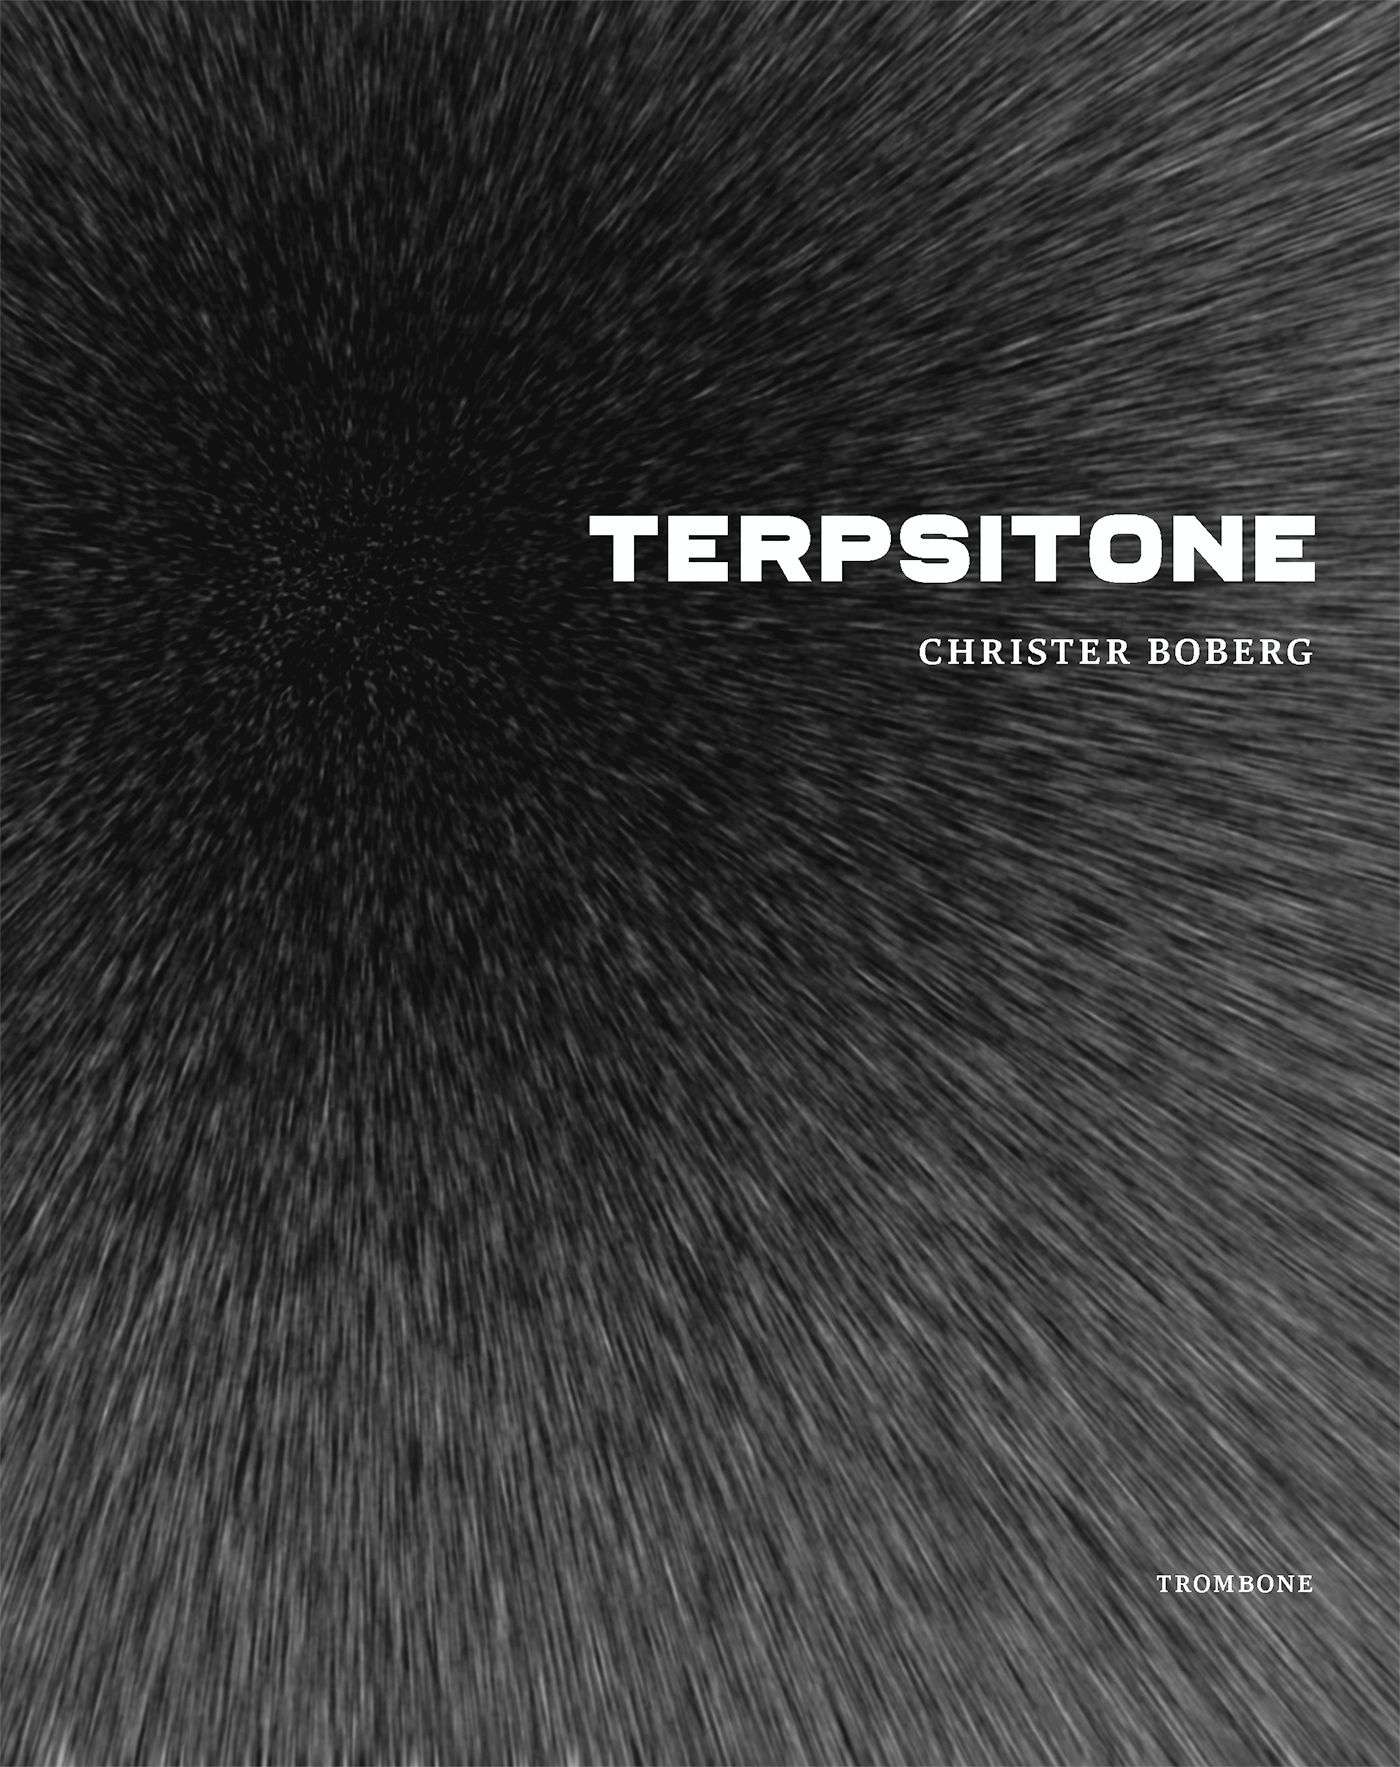 Terpsitone, eBook by Christer Boberg